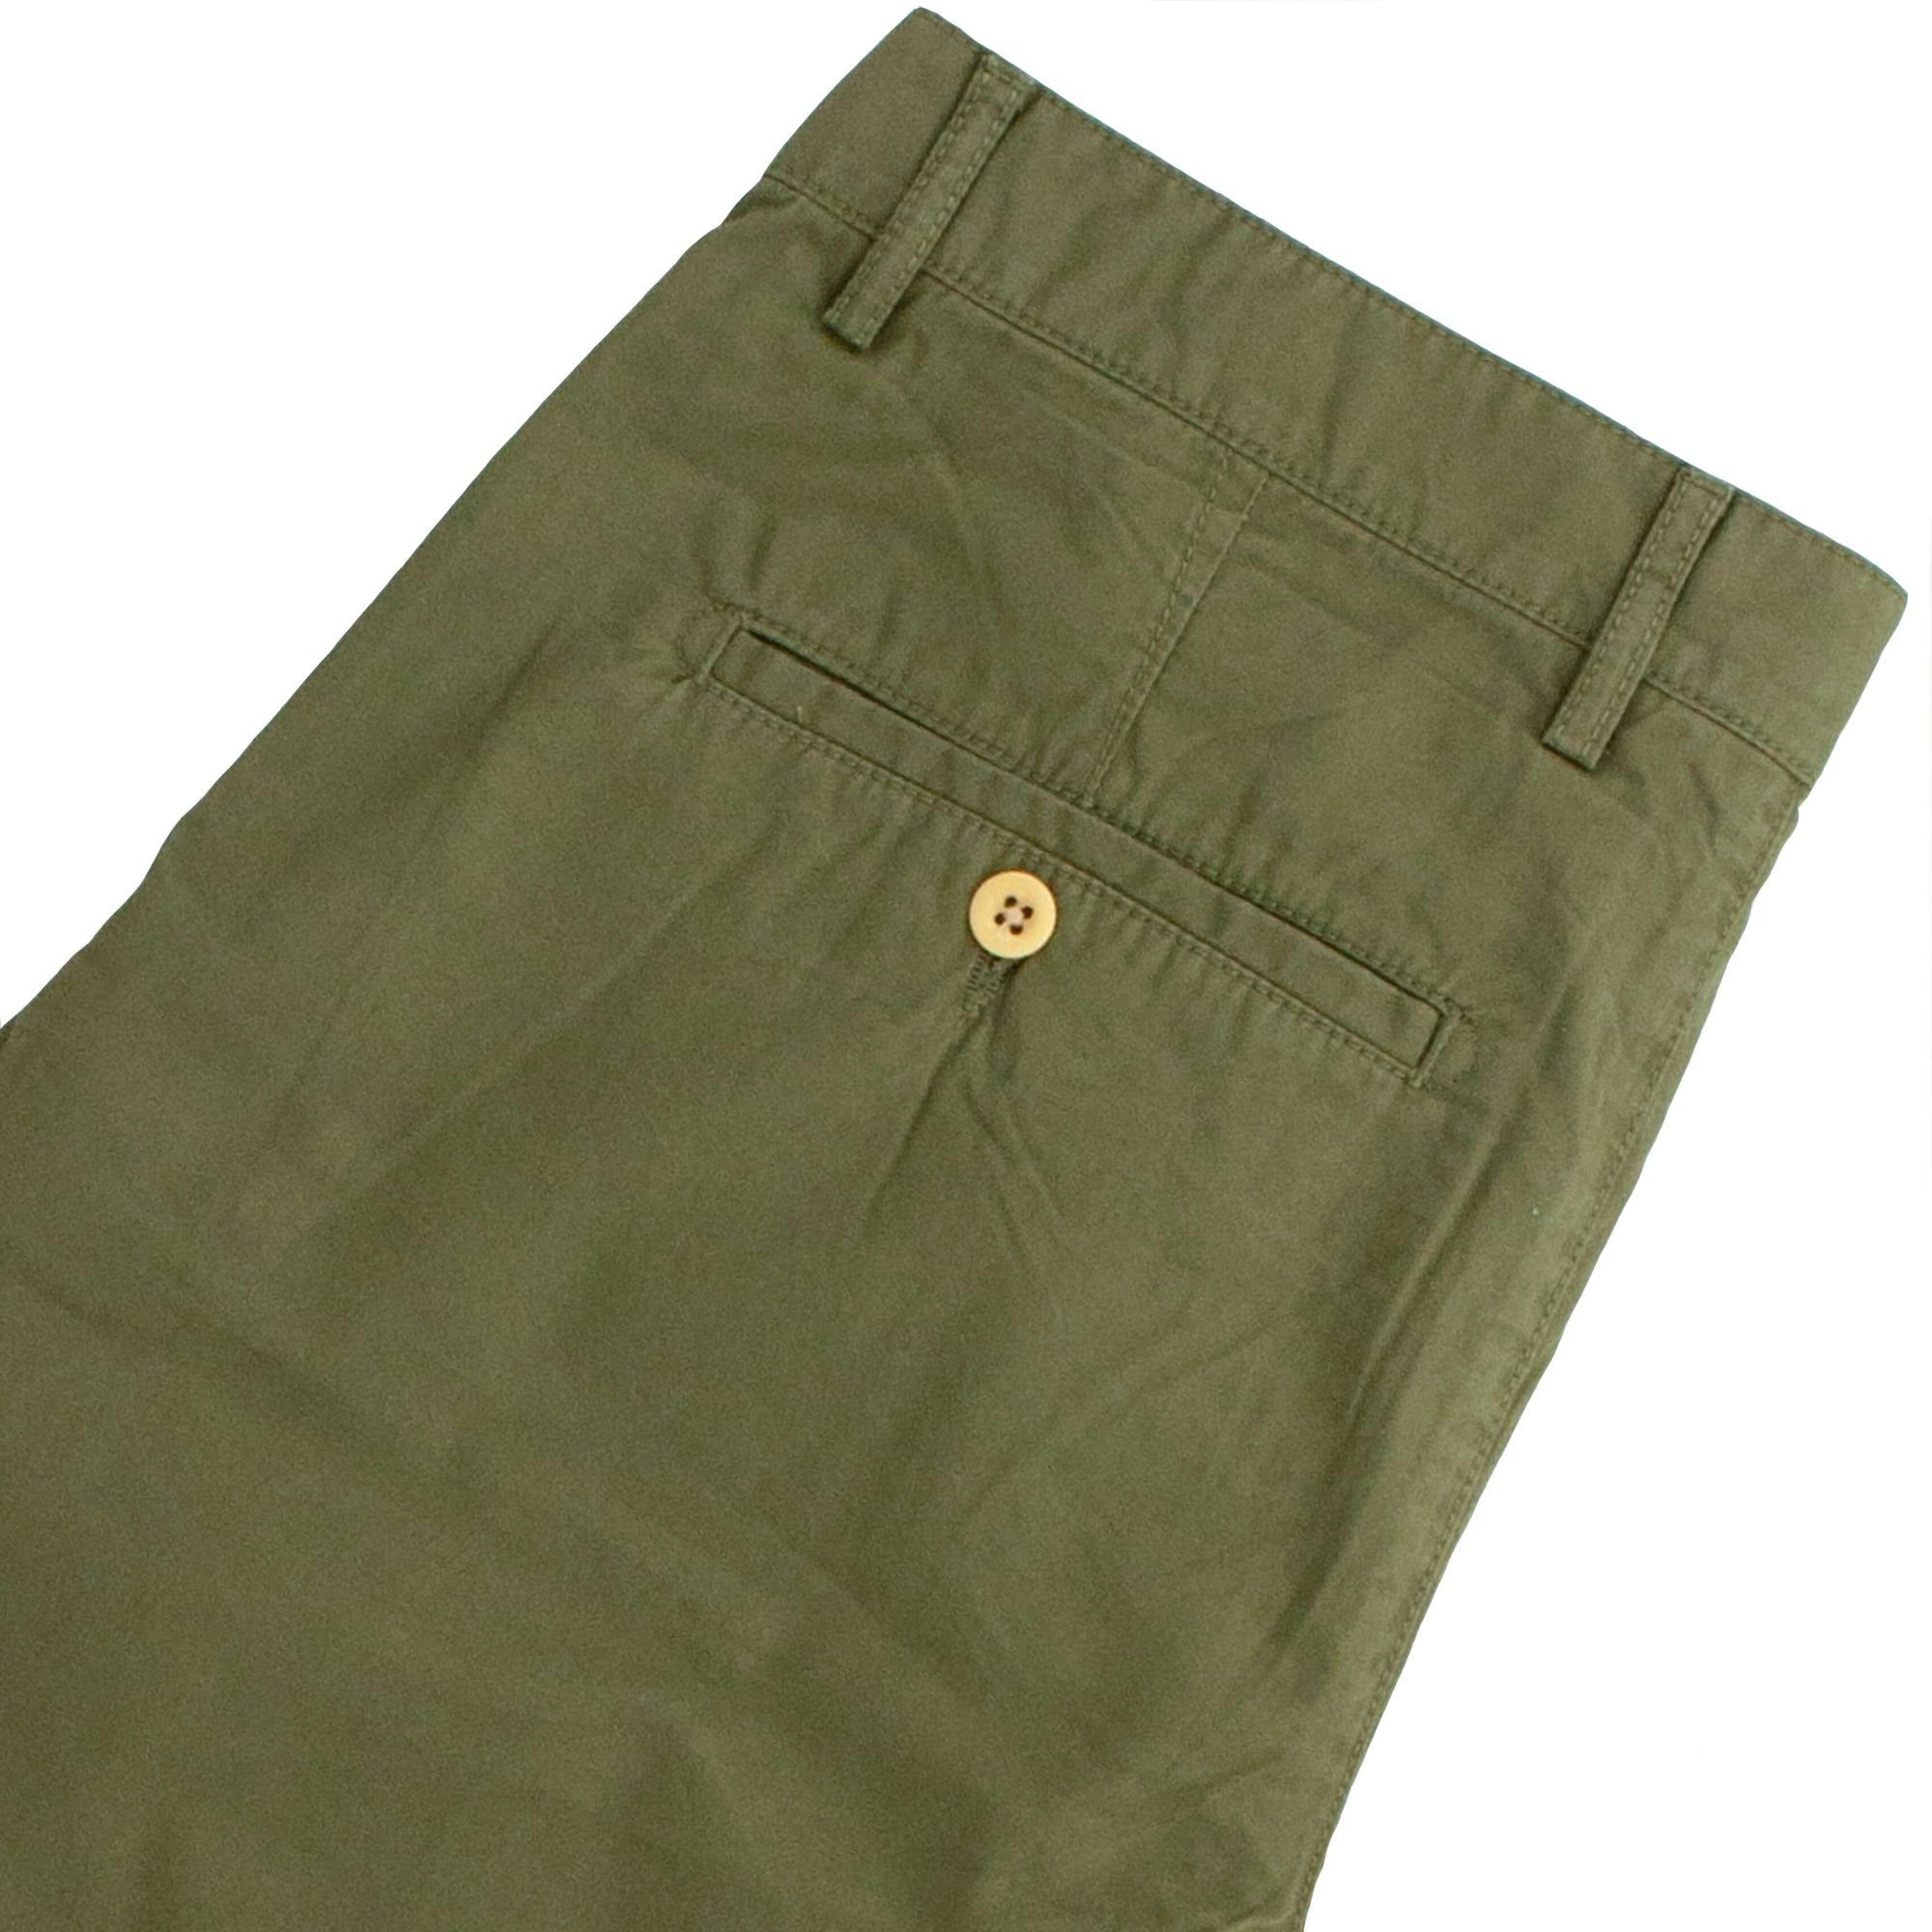 Shorts aus Herren Relaxed Shorts Baumwolle Summer 20011 Gant Junipergreen(301)